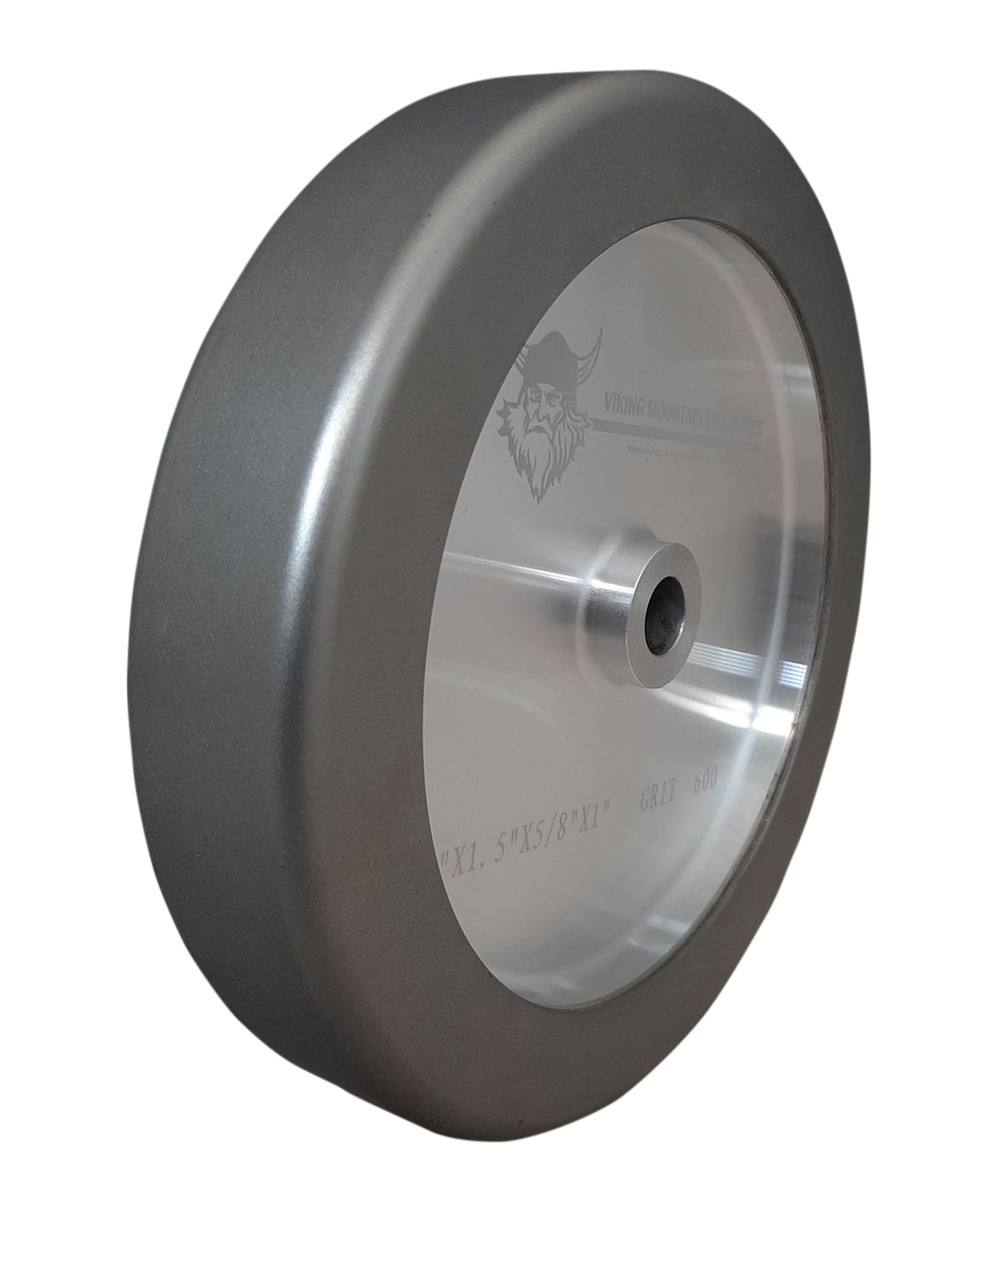 VMTW 8X1.5 inch CBN Grinding Wheel 600 Grit  One inch side walls 1/4 radius each side 5/8 inch Arbor